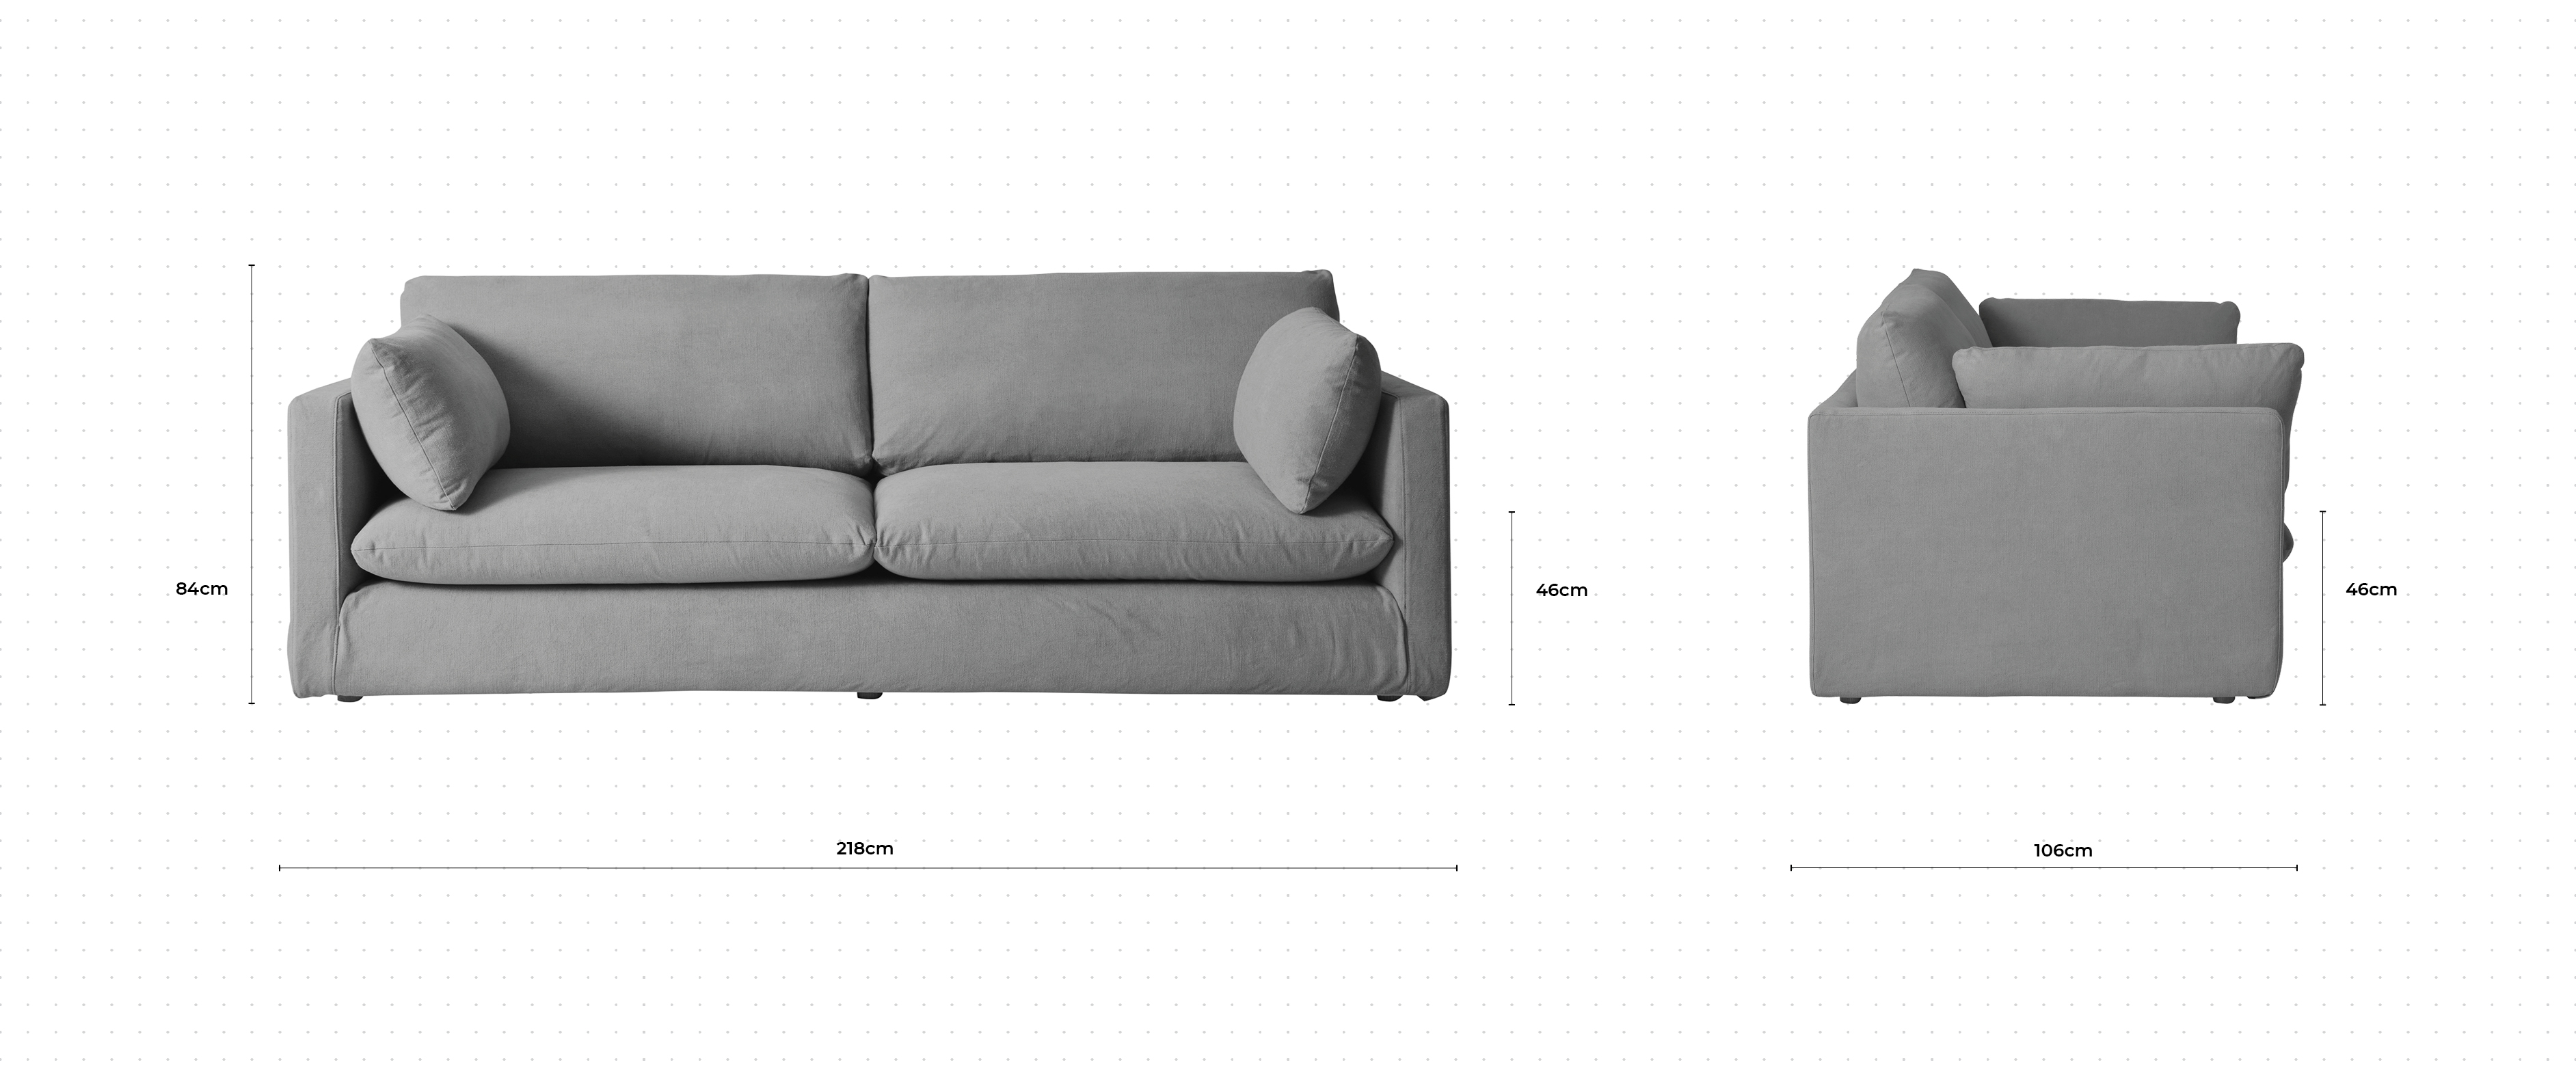 La Jola 3 Seater Sofa dimensions